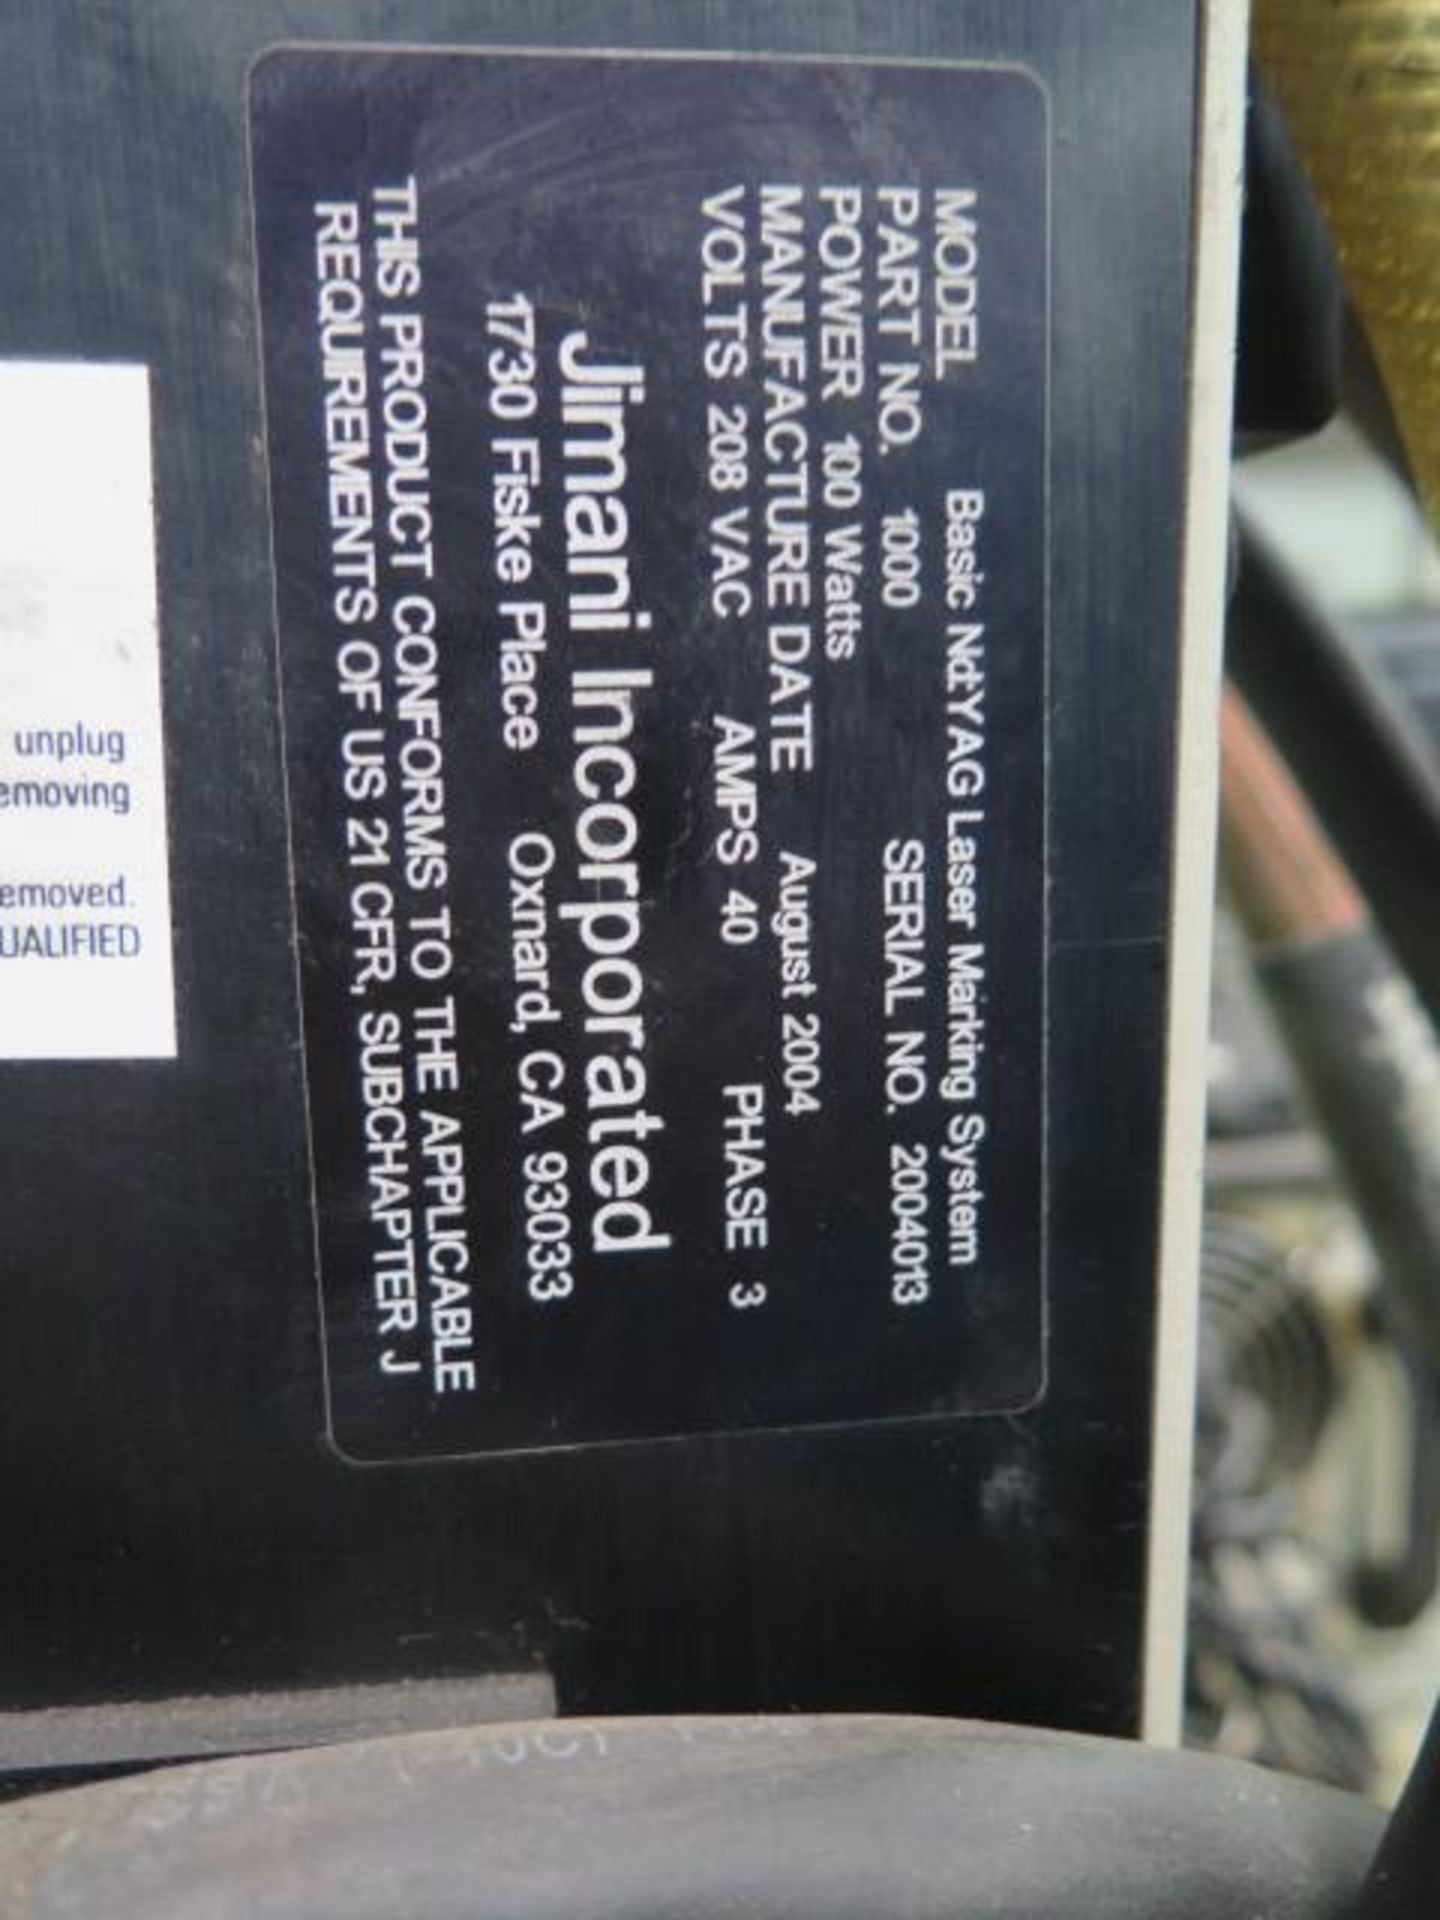 Jimani Inc / Lee Laser 100 Watt Basic Nd:YAG Laser Marking System s/n 2004013, SOLD AS IS - Image 11 of 12